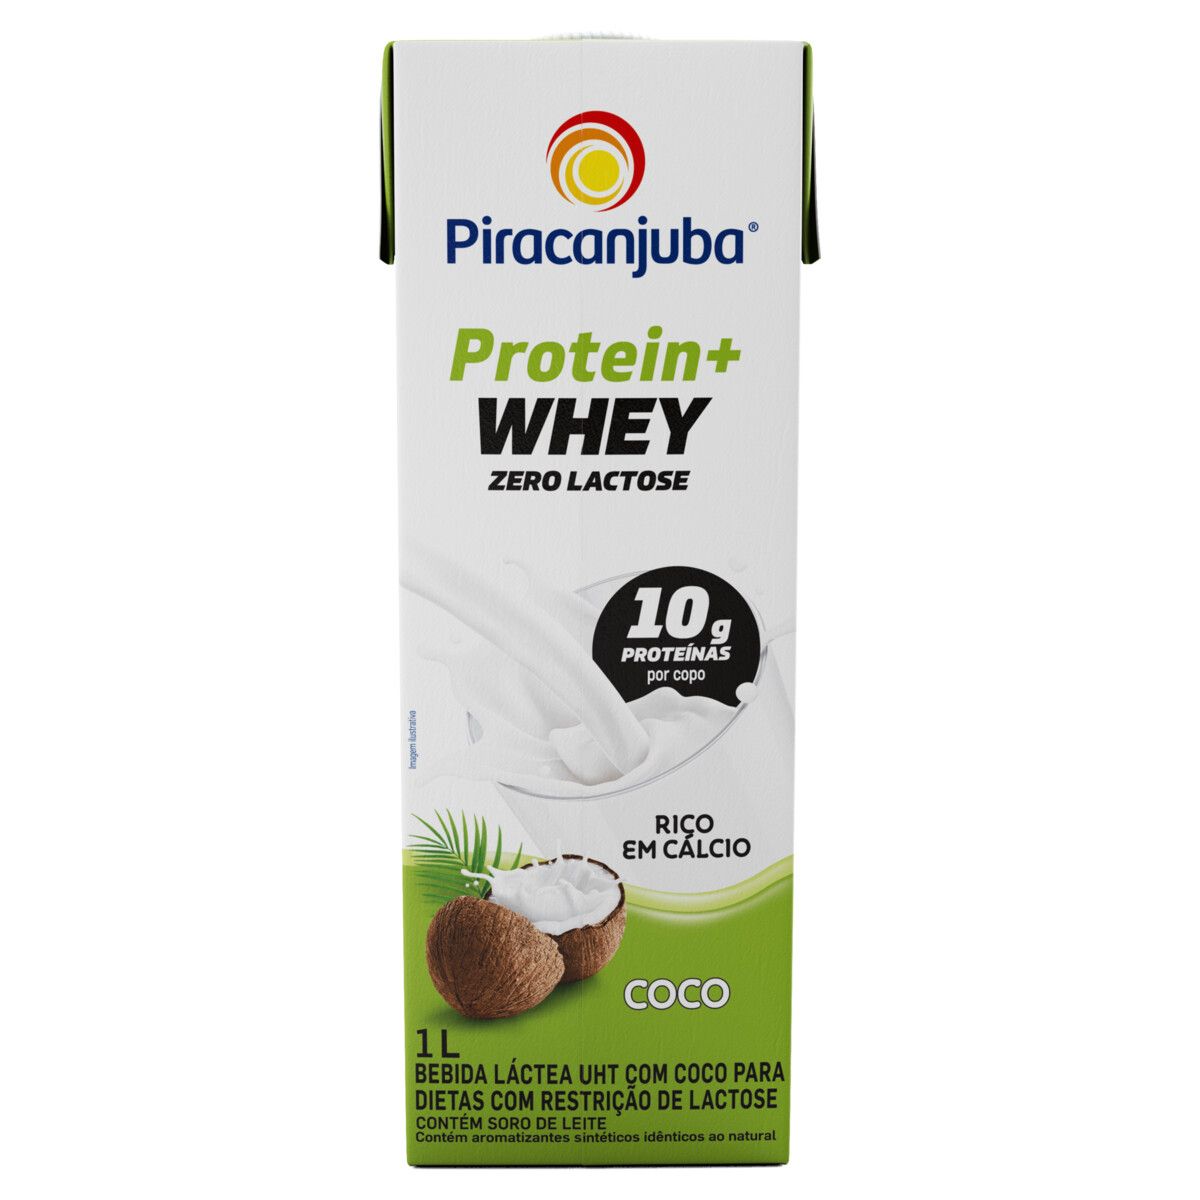 Bebida Láctea UHT Piracanjuba Protein + Whey Coco Zero Lactose 1l image number 3